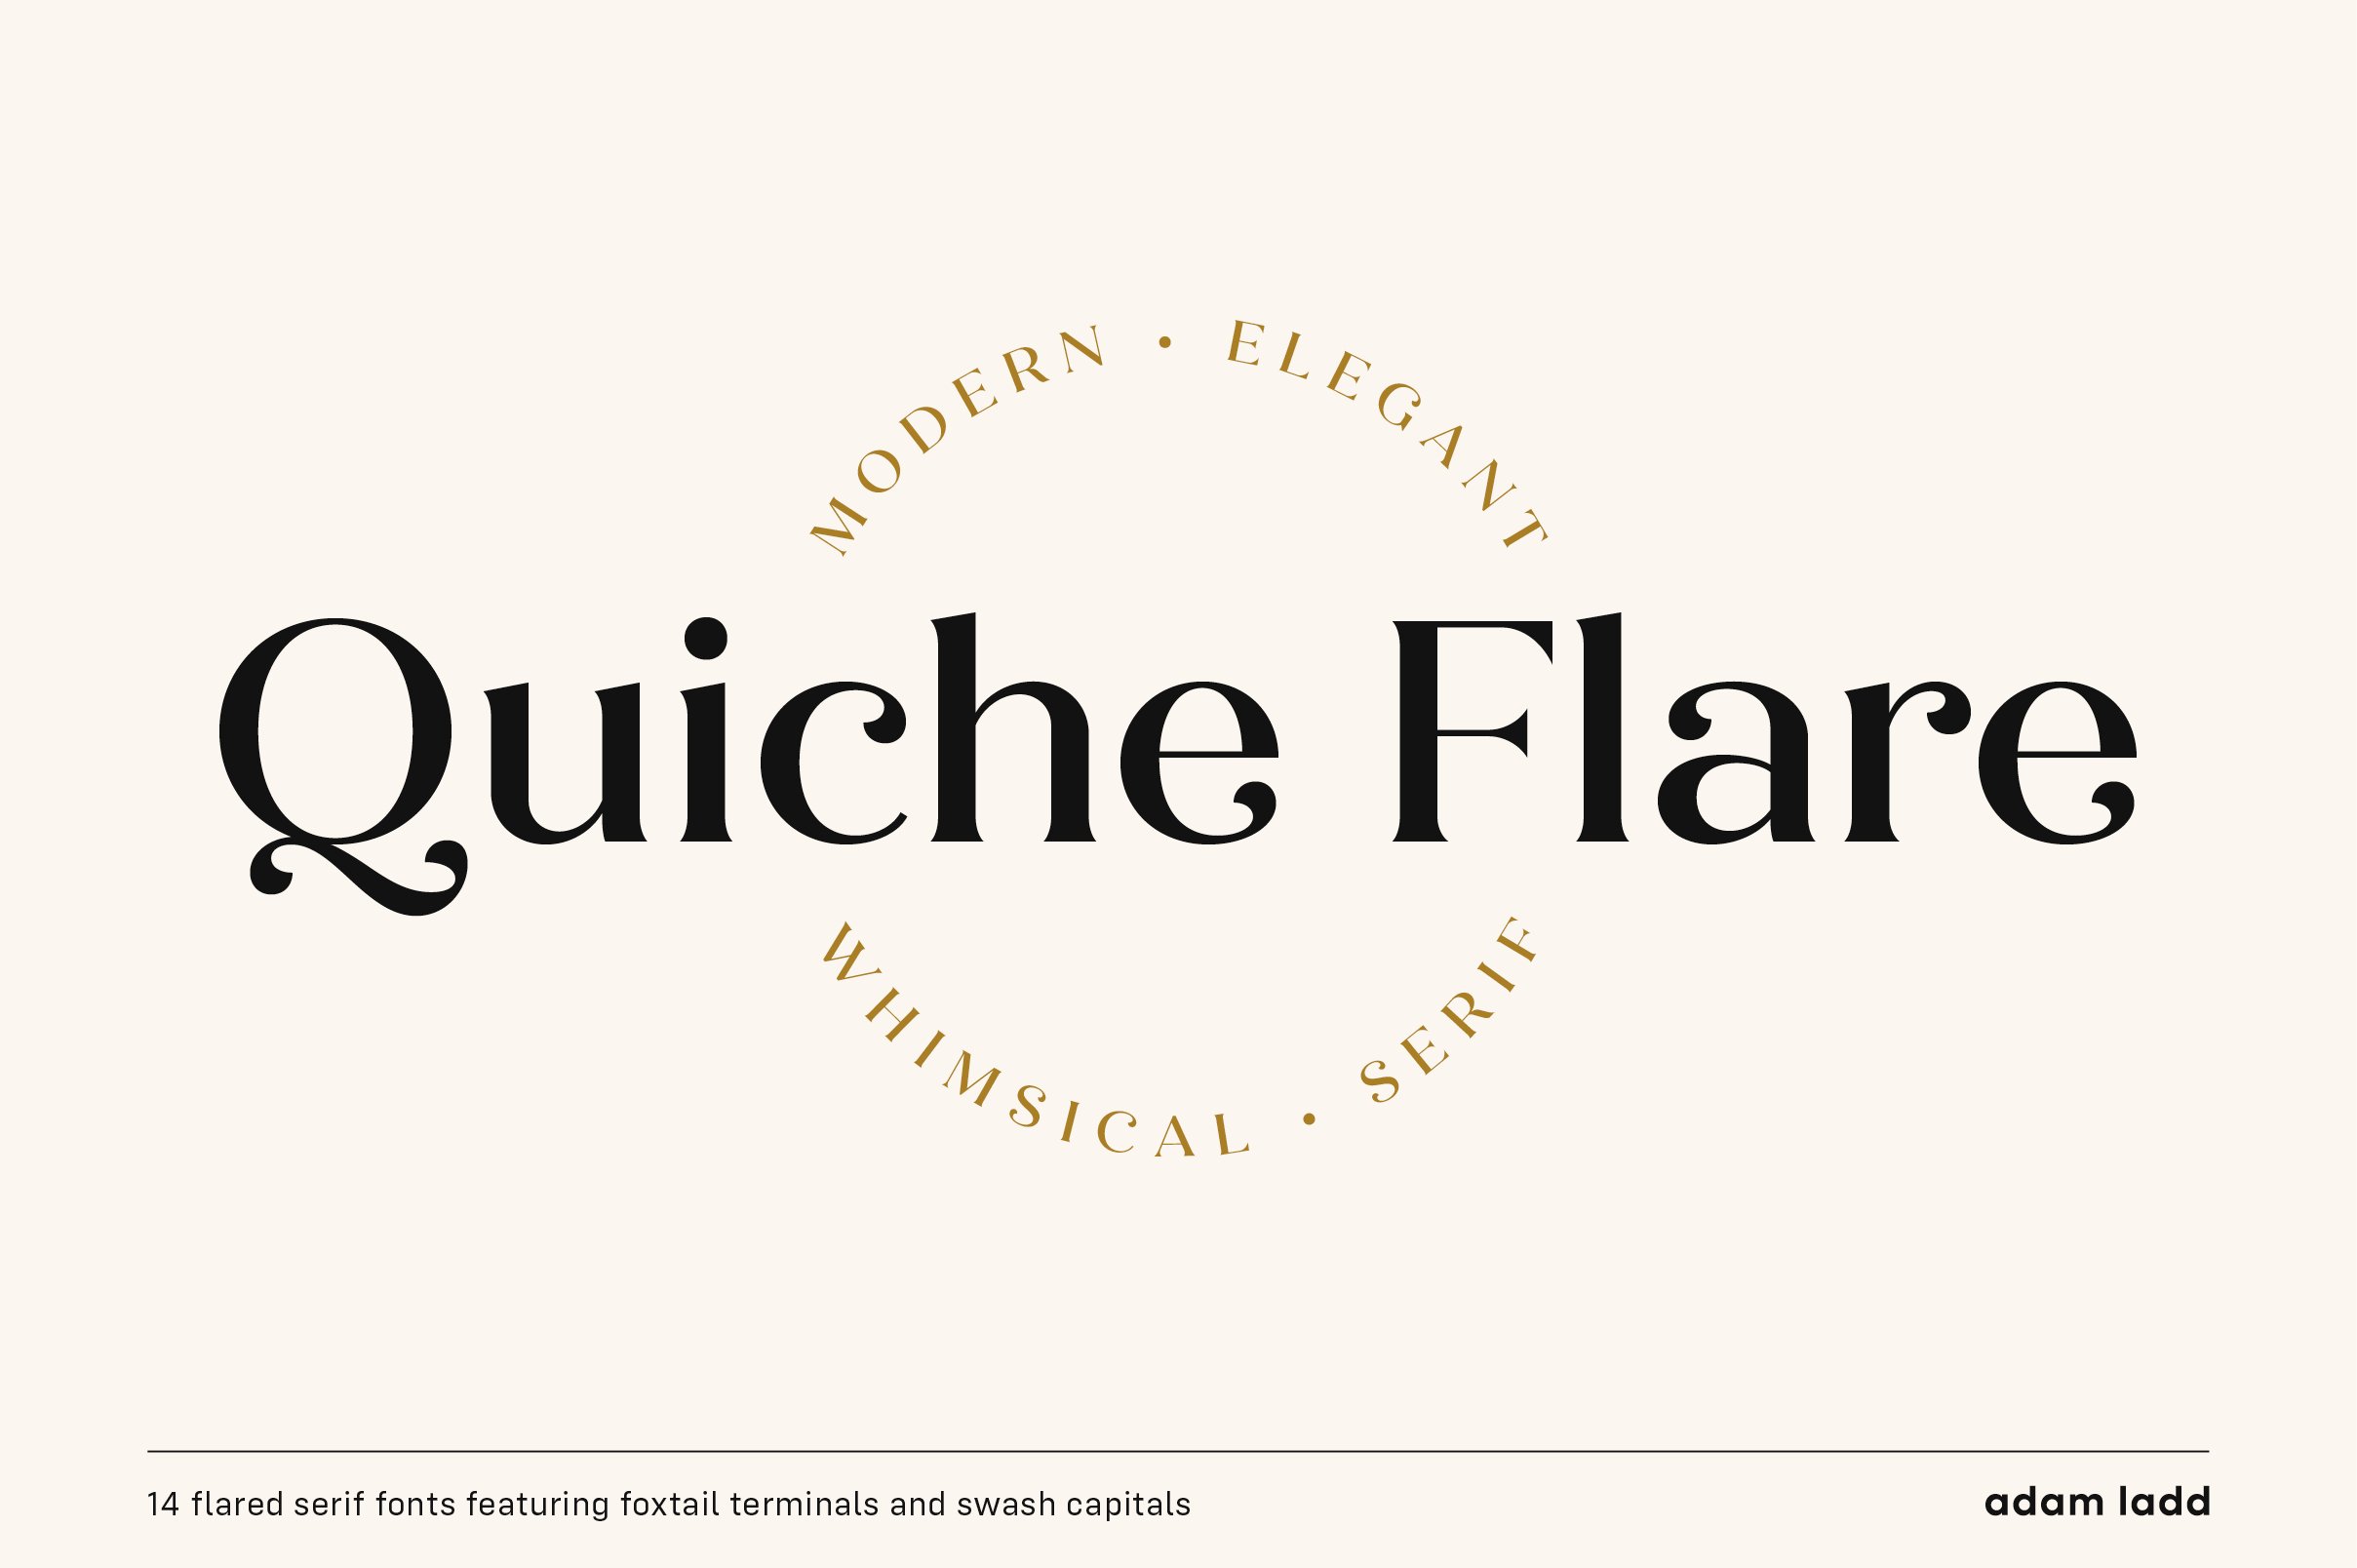 Quiche Flare Font Family cover image.